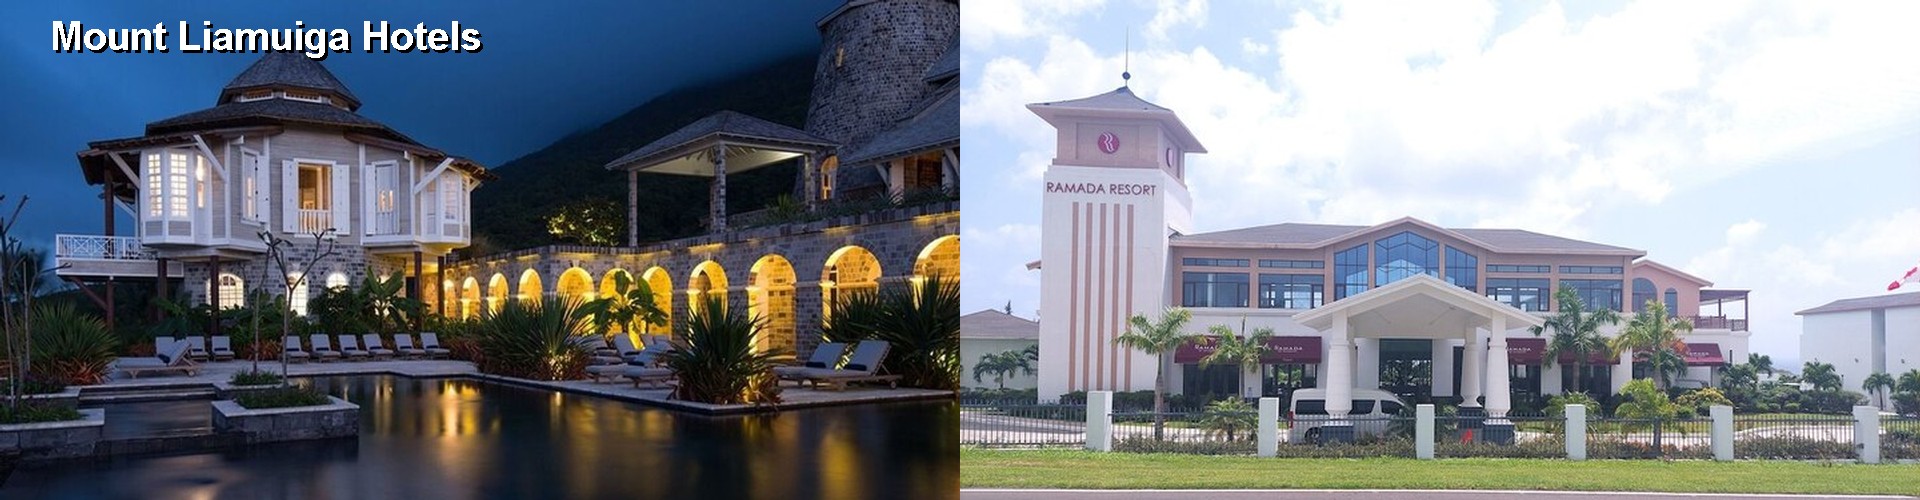 5 Best Hotels near Mount Liamuiga